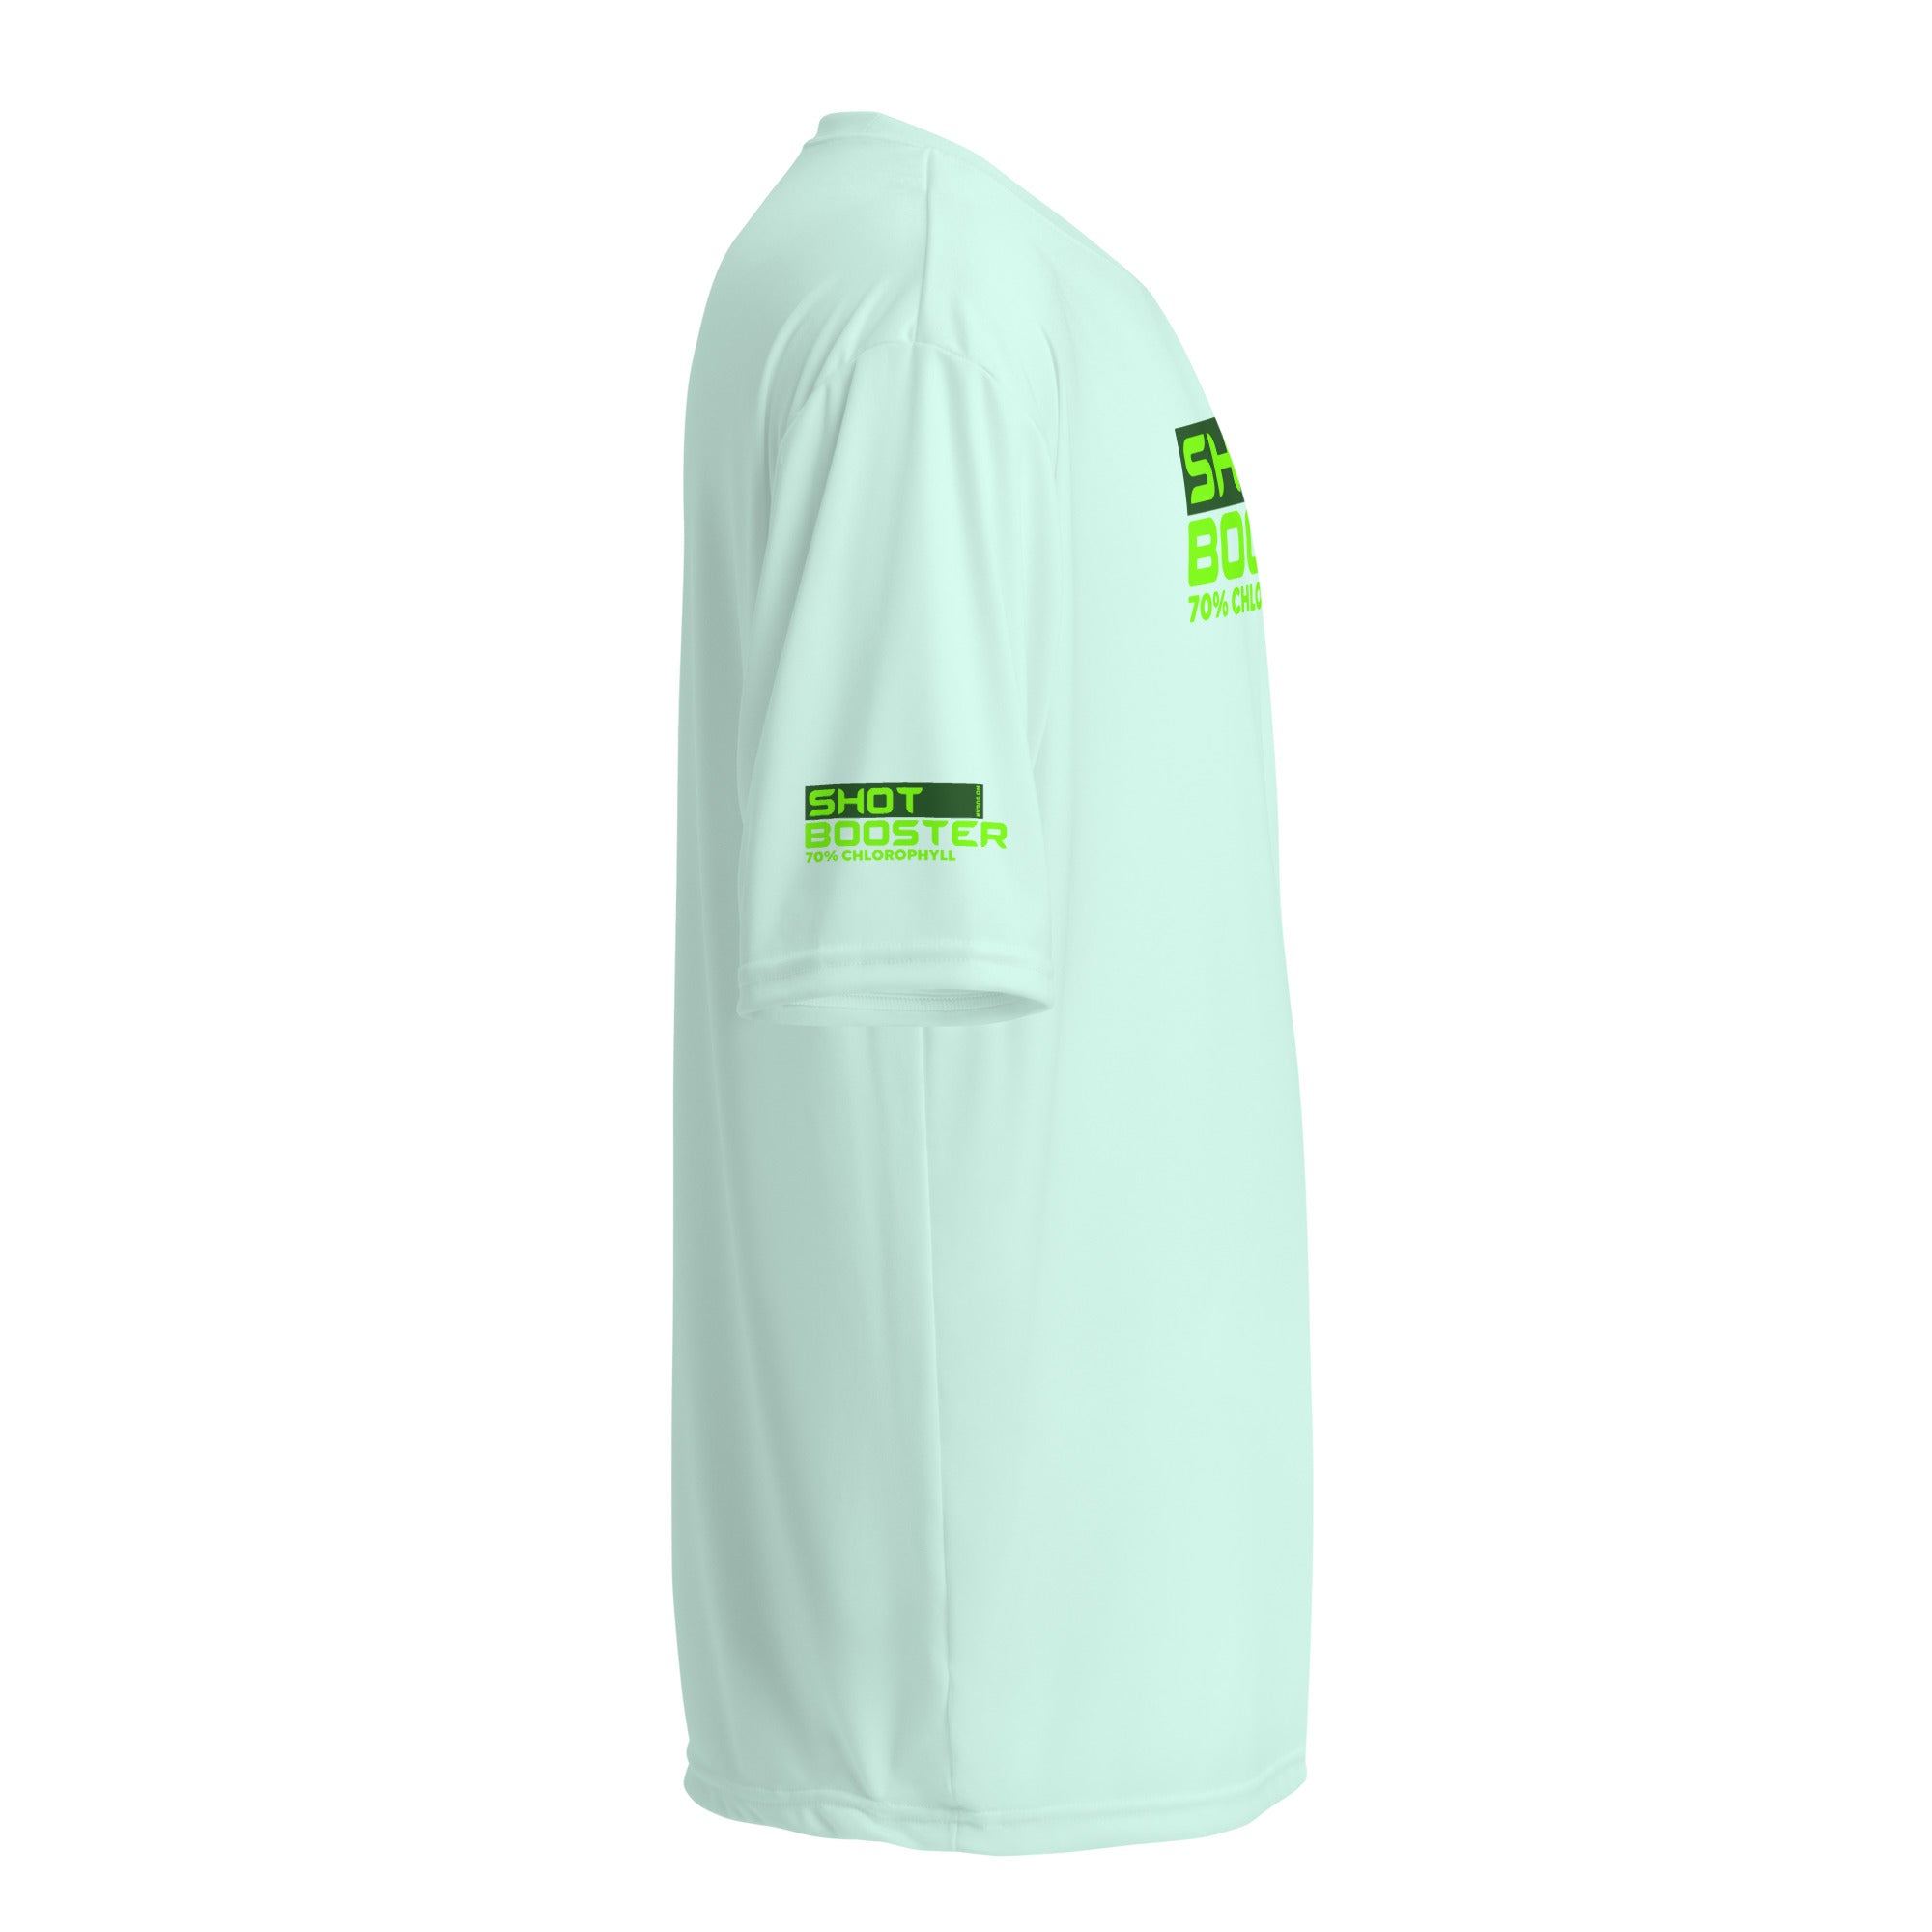 Unisex Performance Crew Neck T-Shirt - Shot Booster 70% Chlorophyll No Sugar - GRAPHIC T-SHIRTS